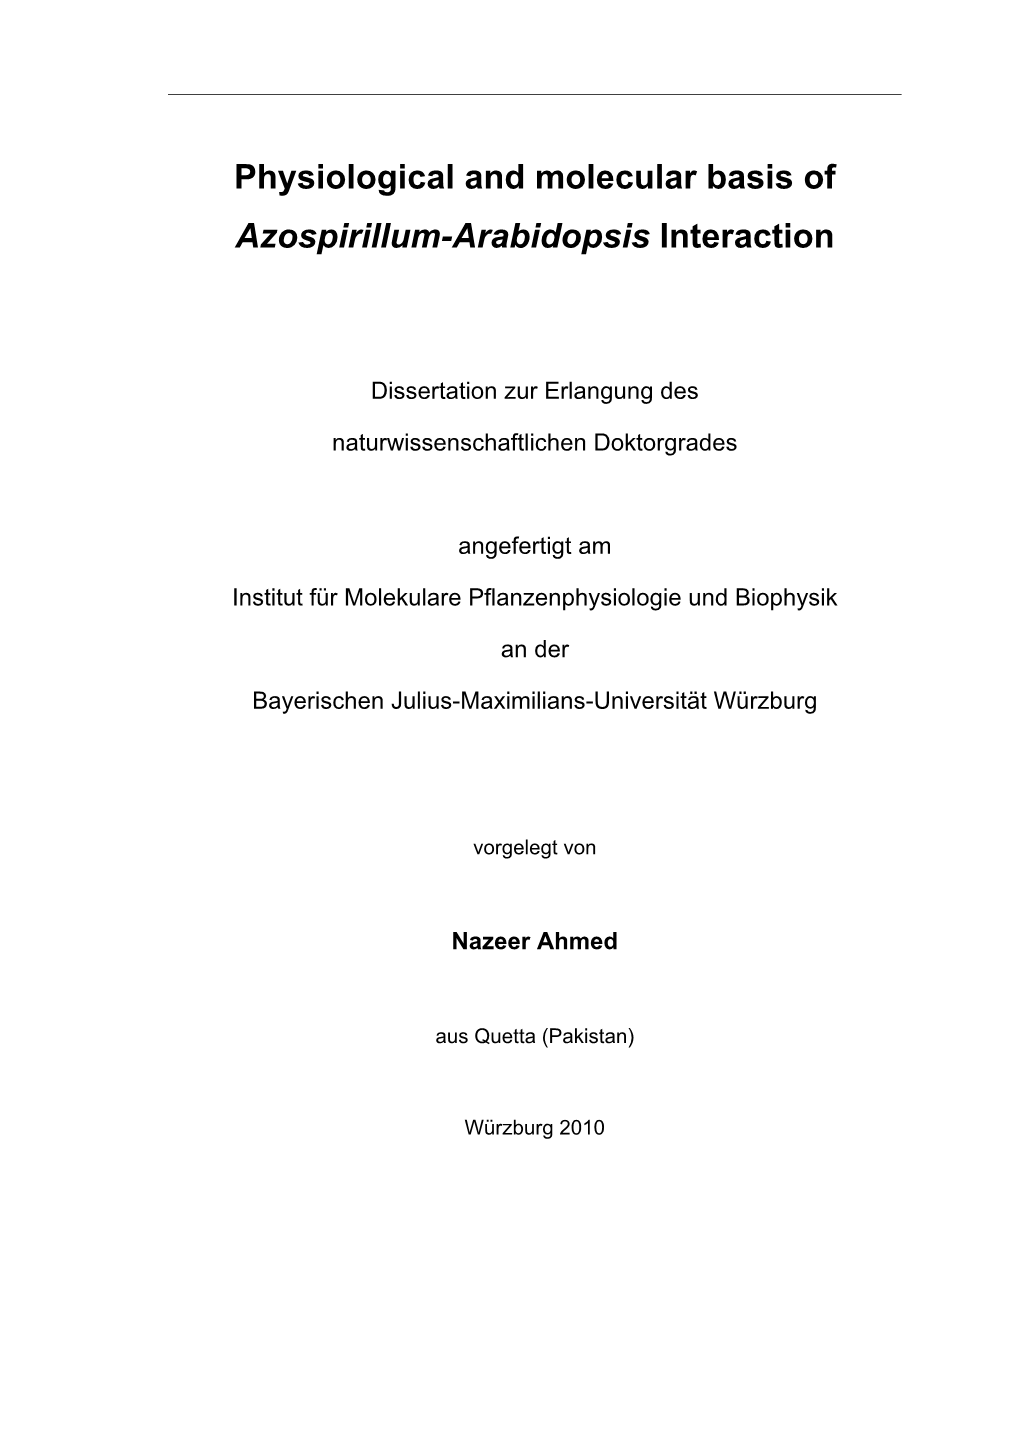 Physiological and Molecular Basis of Azospirillum-Arabidopsis Interaction